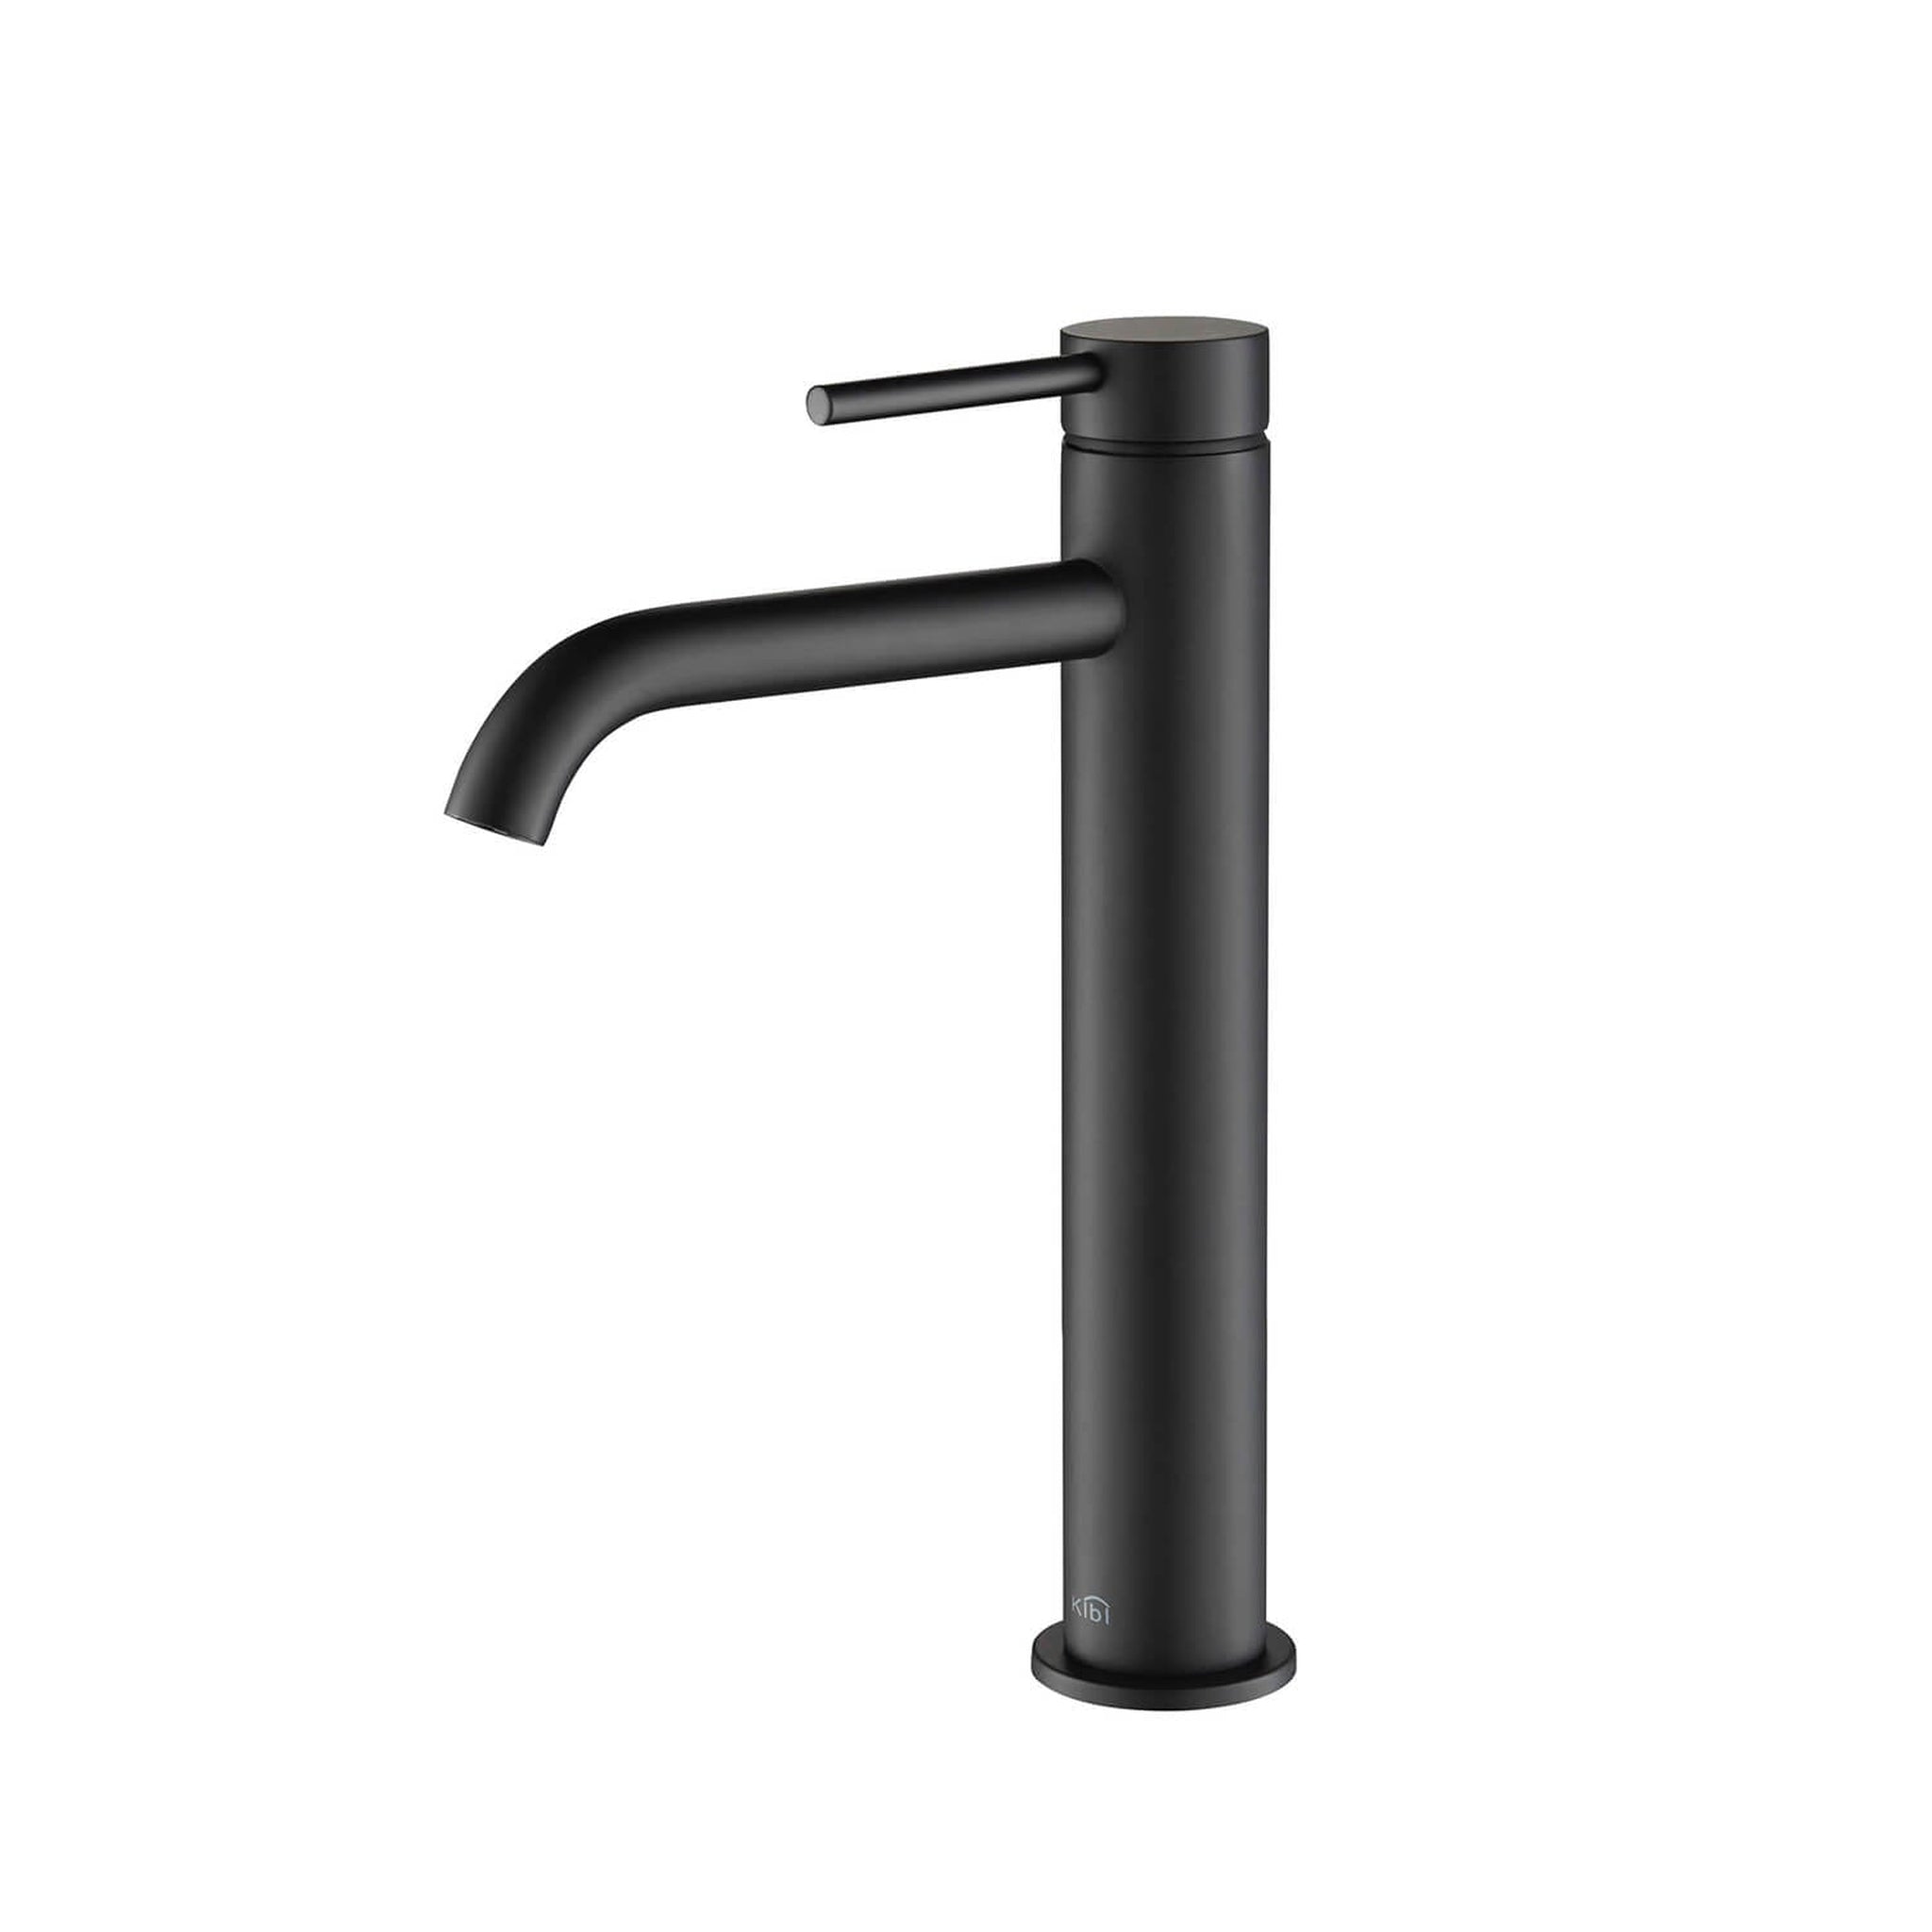 KIBI, KIBI Circular Single Handle Matte Black Solid Brass Bathroom Vessel Sink Faucet